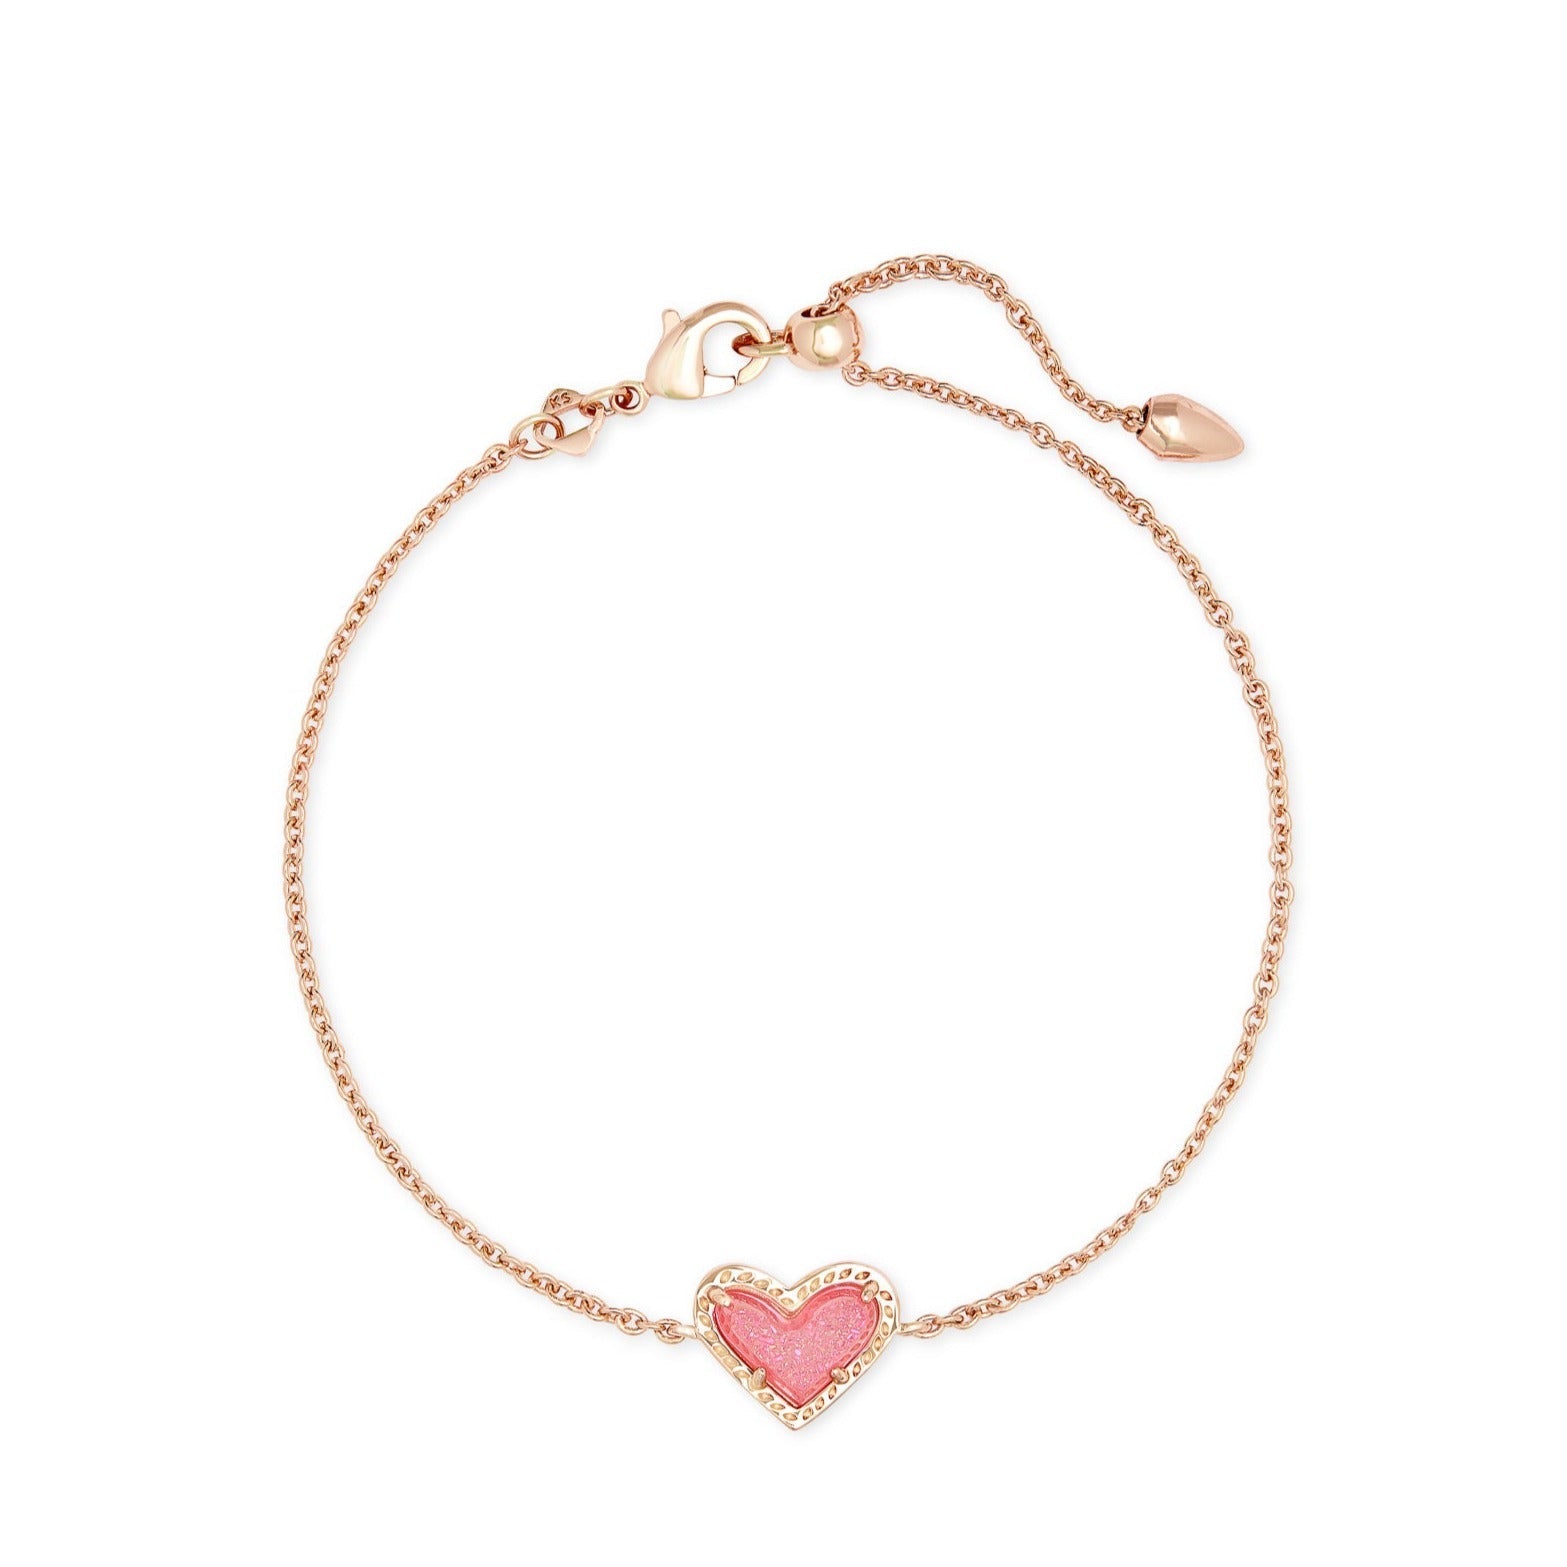 Kendra Scott Ari Heart Delicate Chain Bracelet in Rose Gold Pink Drusy